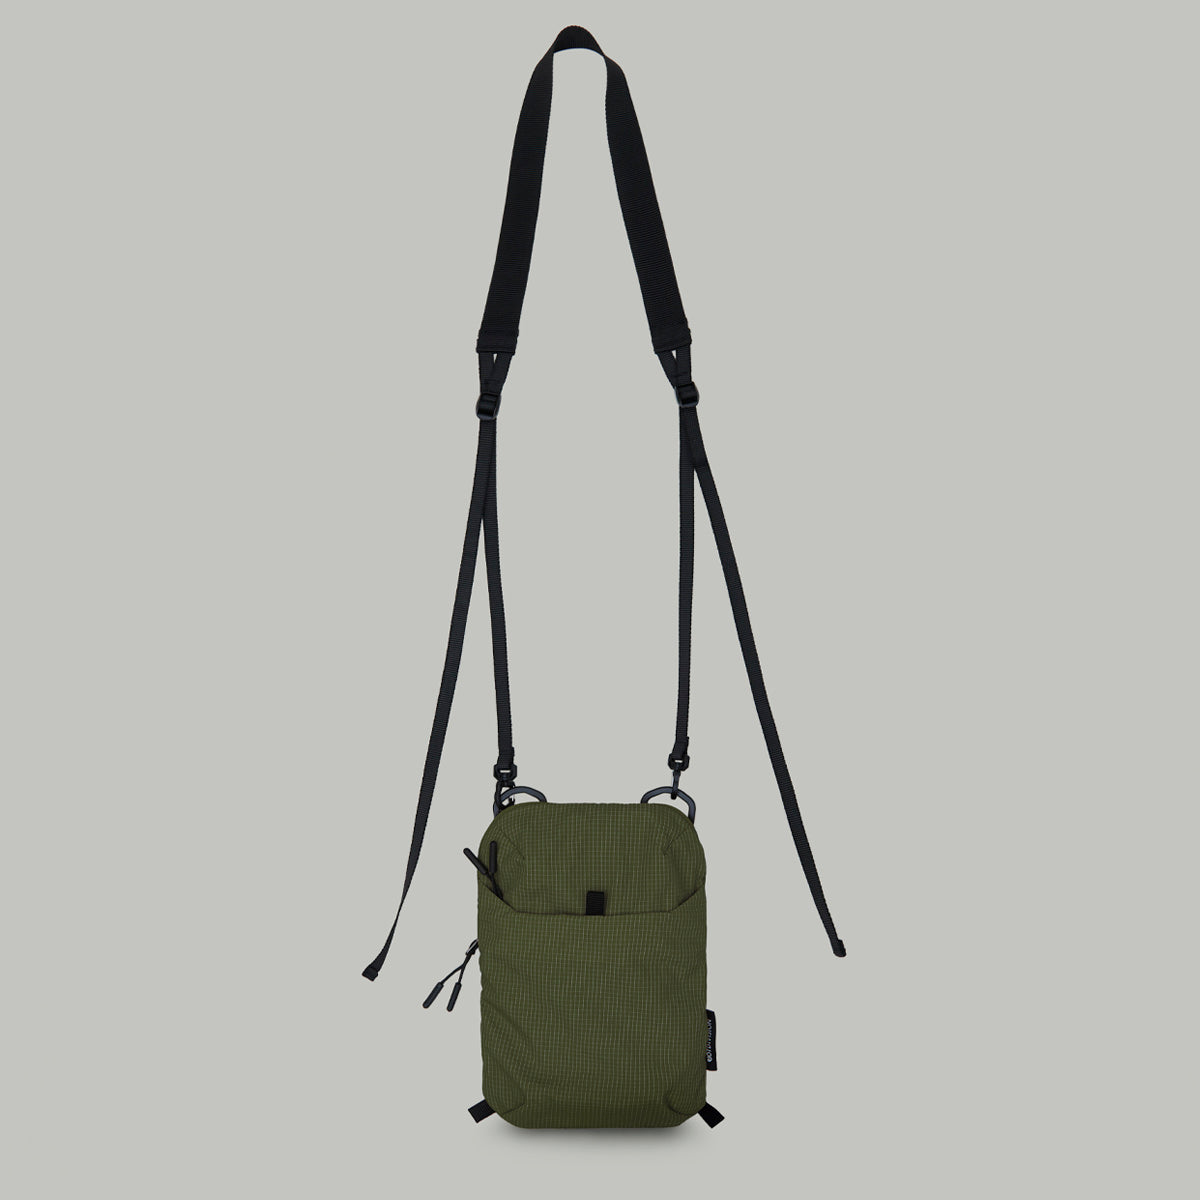 Lightweight Urban Bag Modified 1.2 RD-LUBM1.2 GREEN